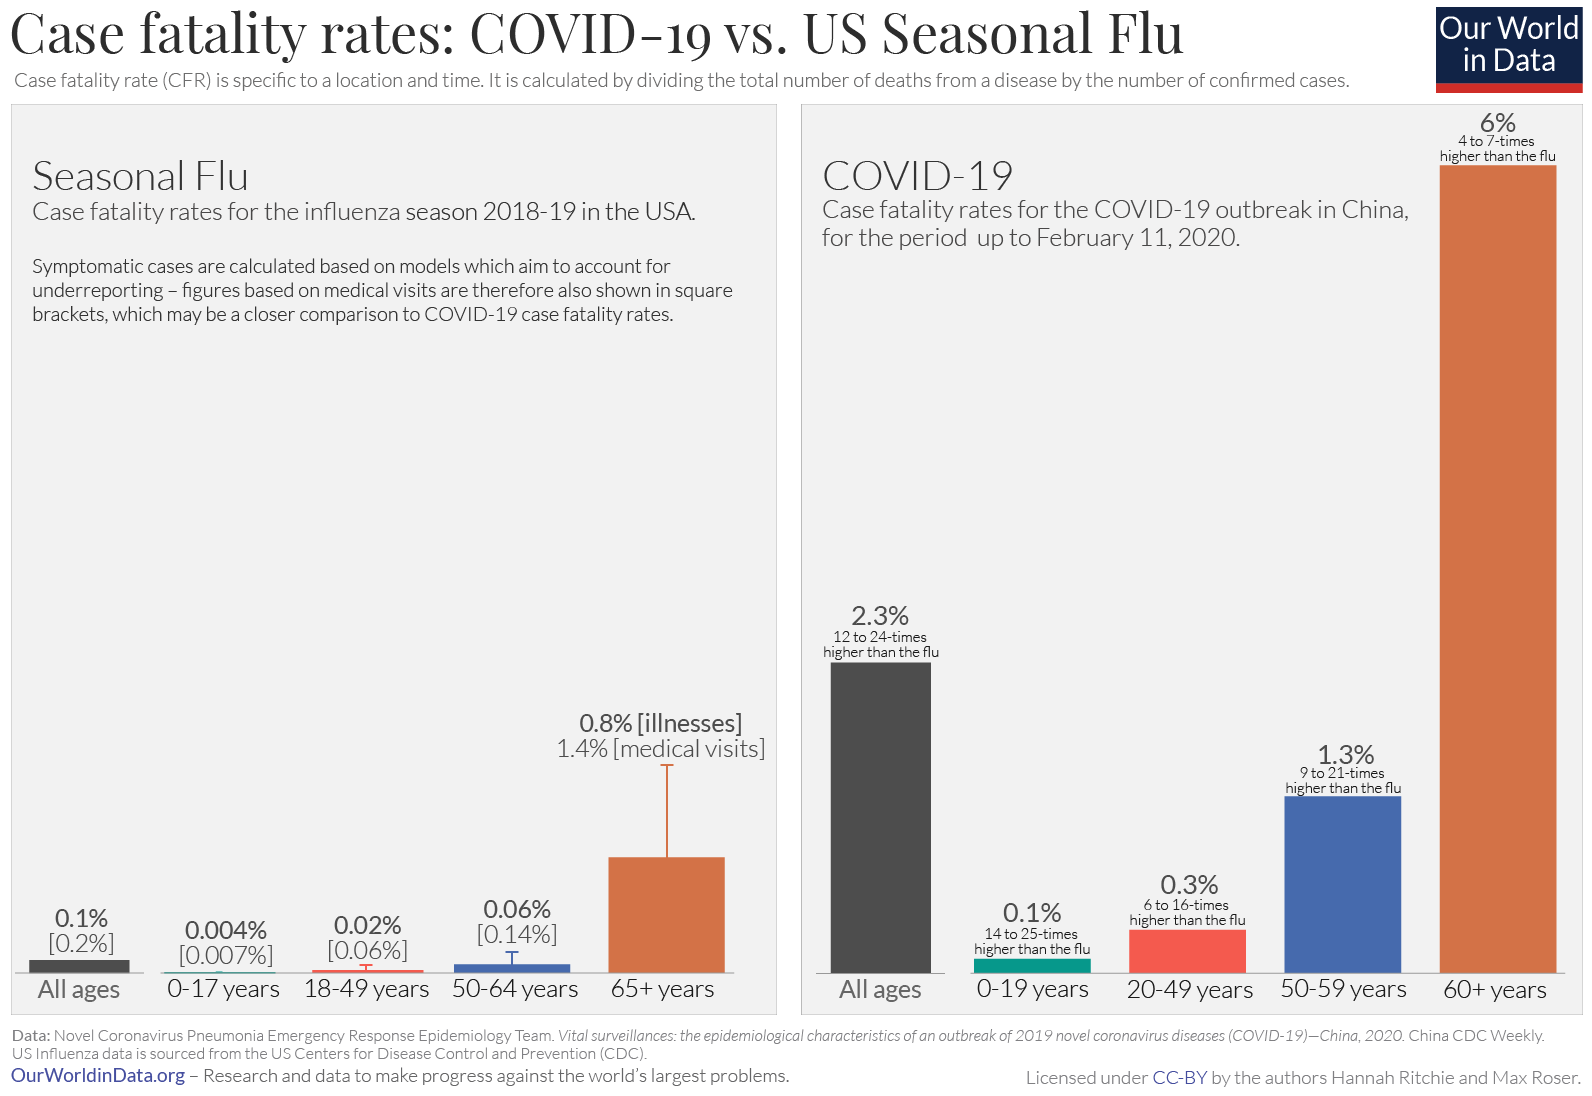 Covid 19 cfr by age vs. us seasonal flu 3